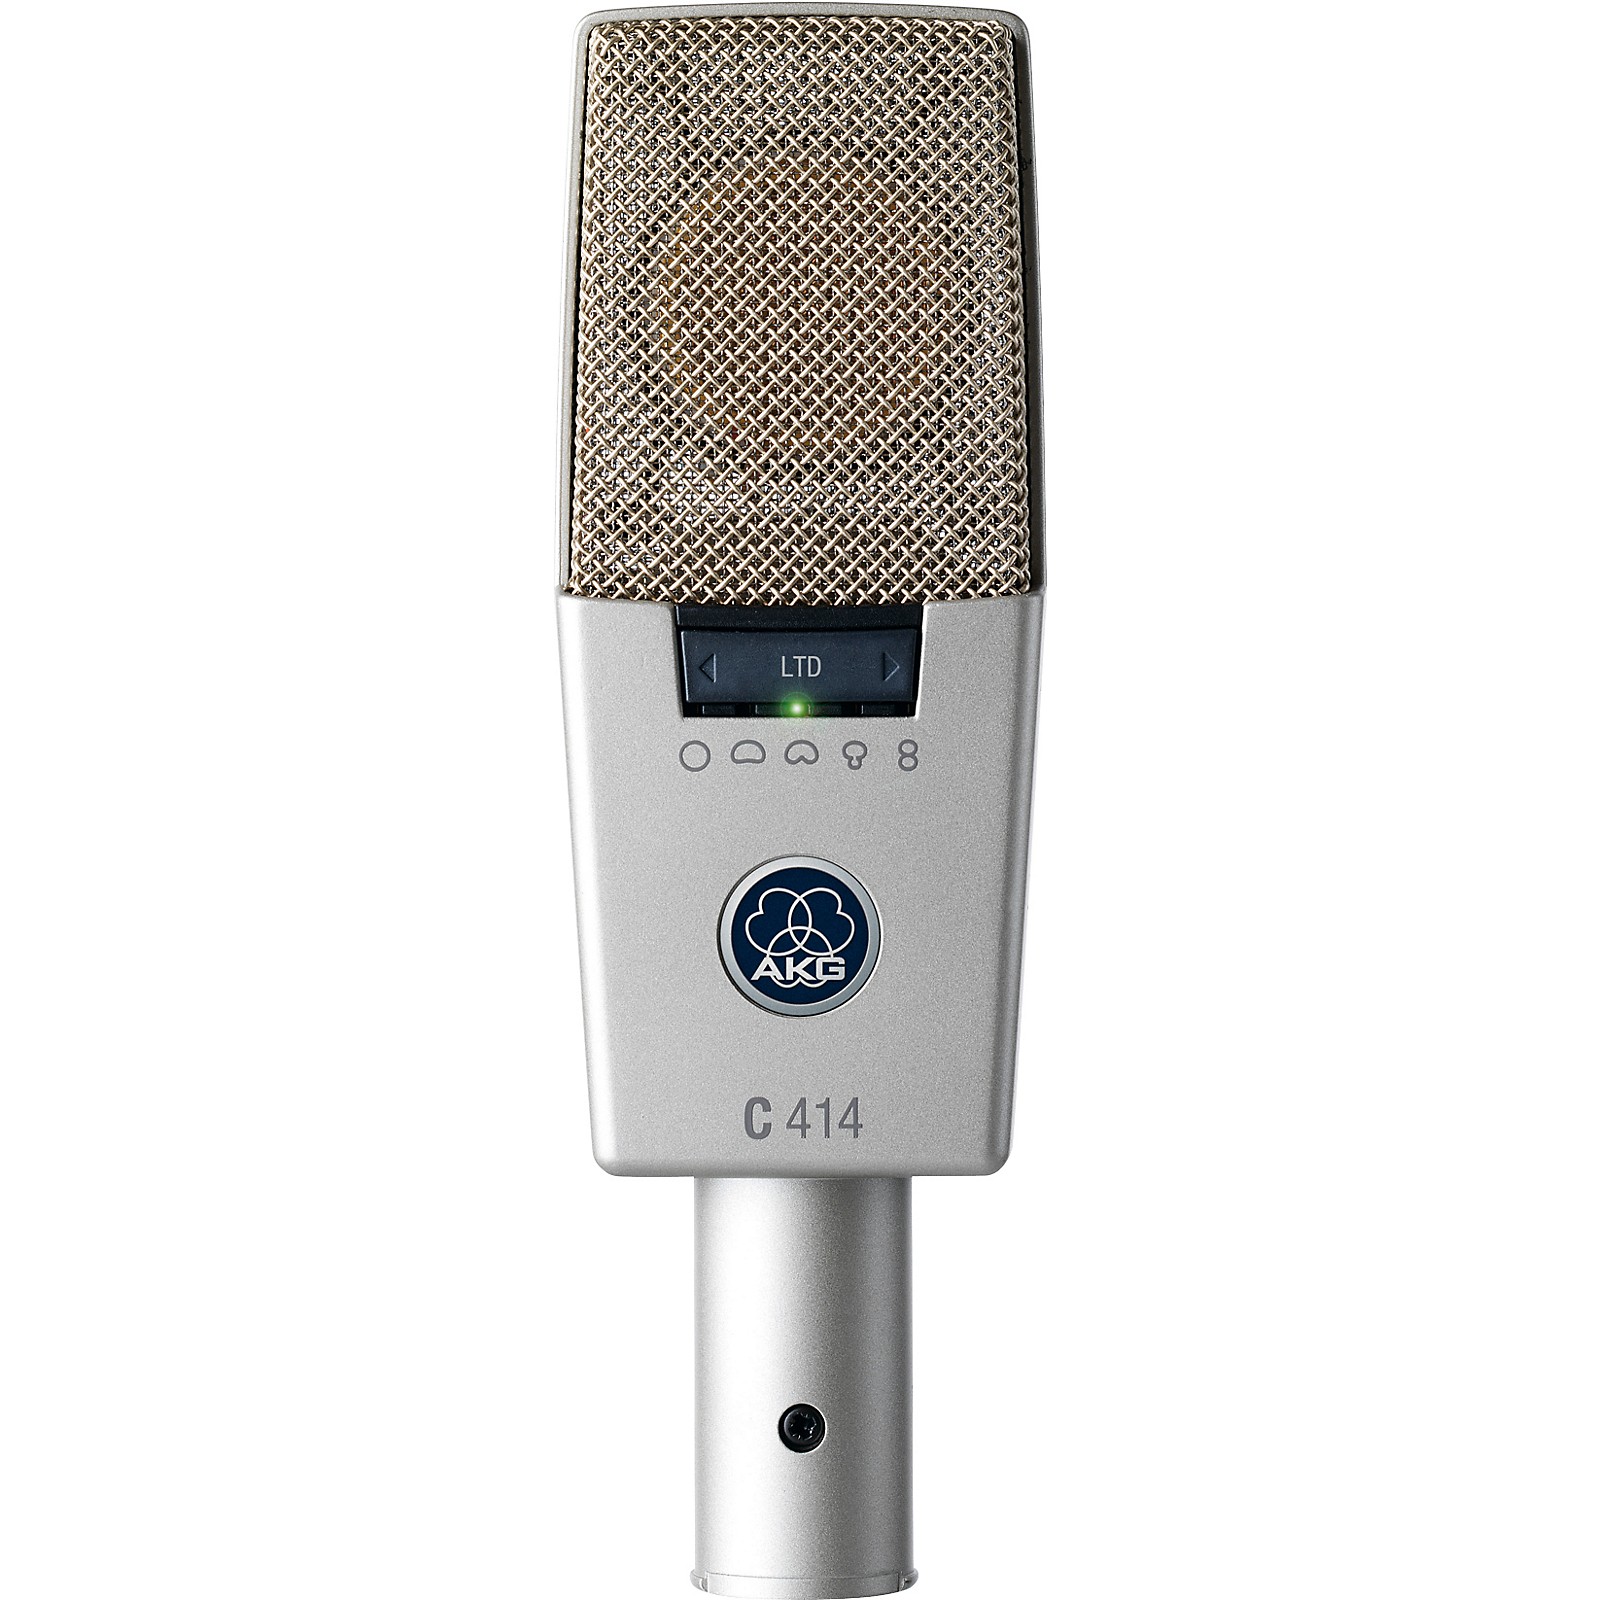 Akg C 414 Ltd Limited Edition Large Diaphragm Condenser Microphone